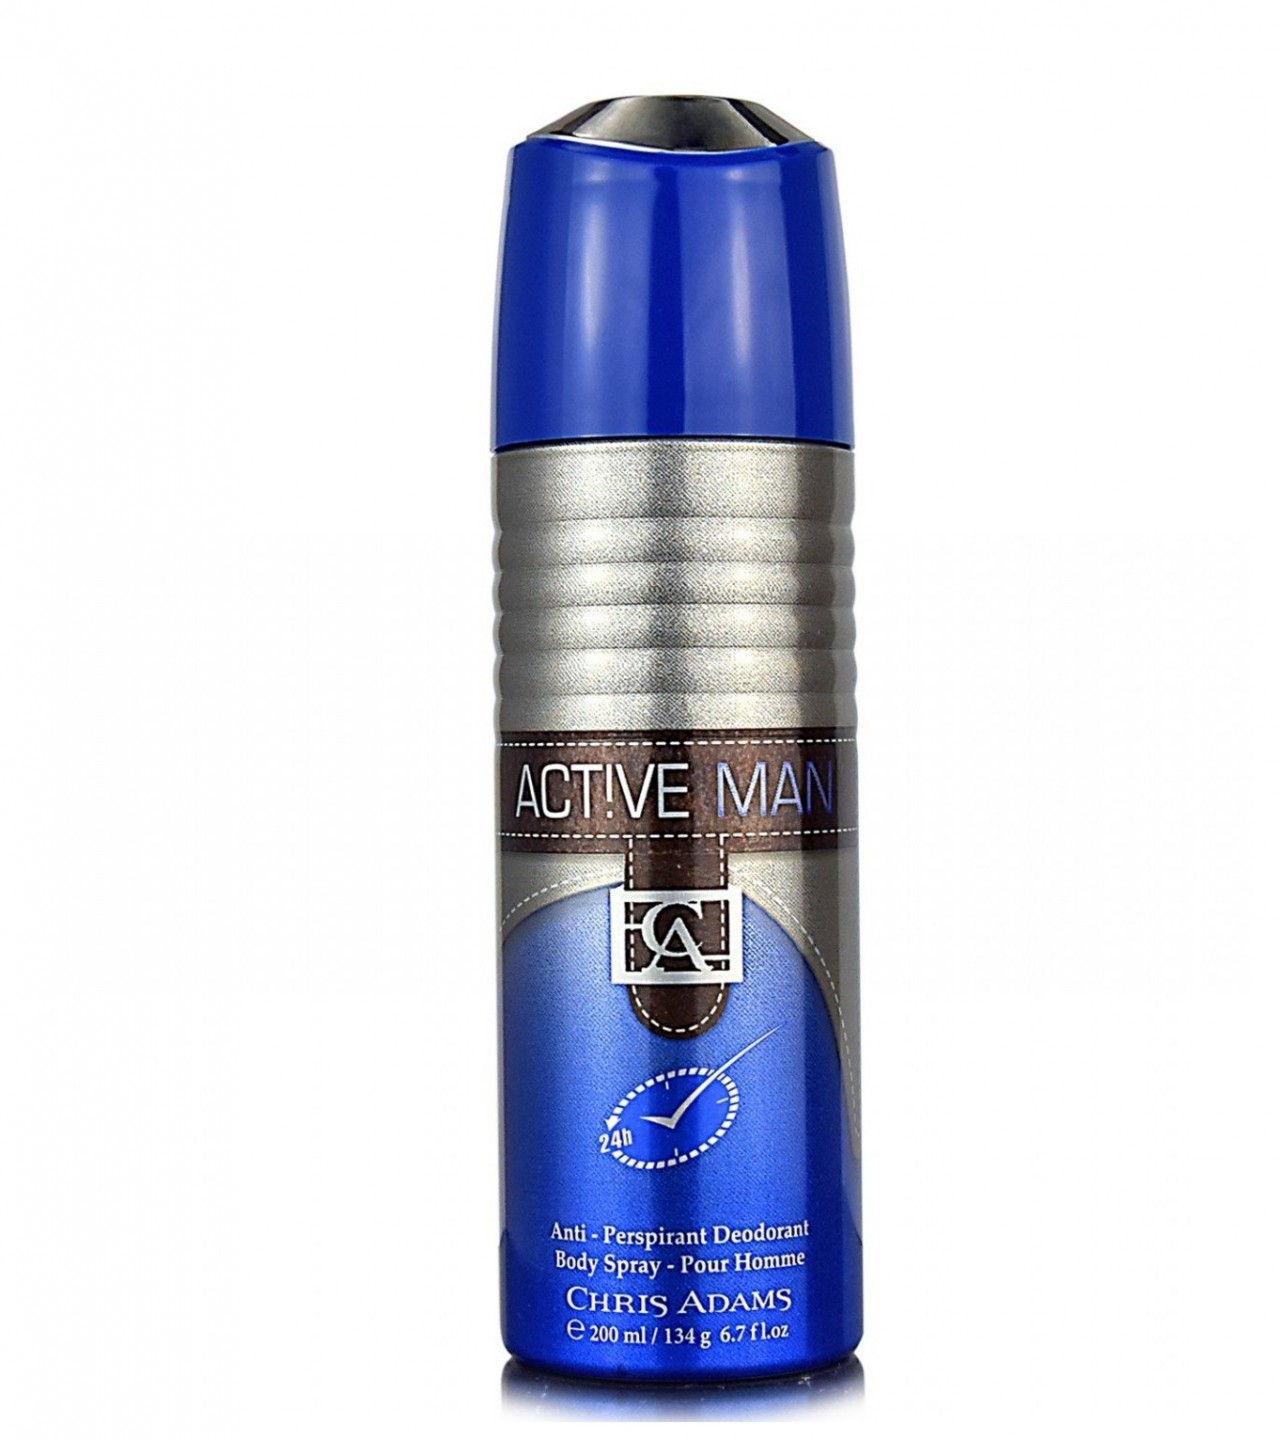 Chris Adams Active Man Body Spray Deodorant For Men - 200 ml